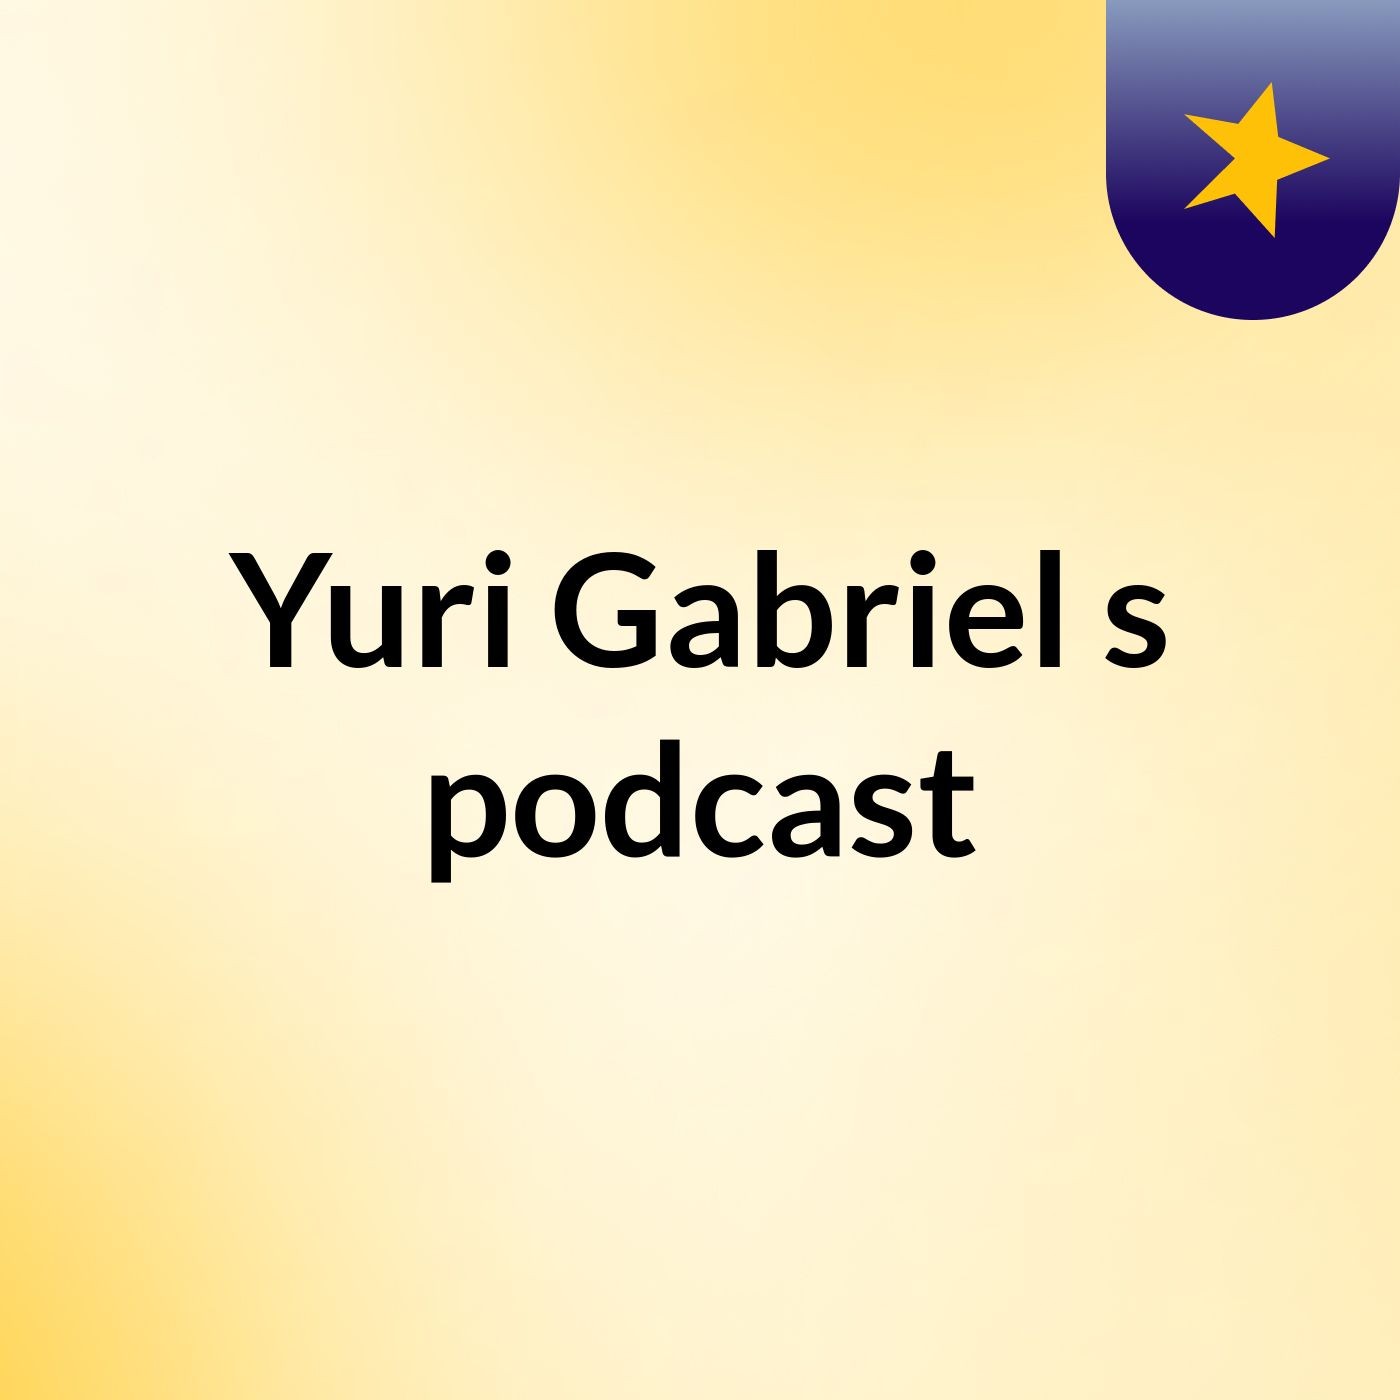 Yuri Gabriel's podcast